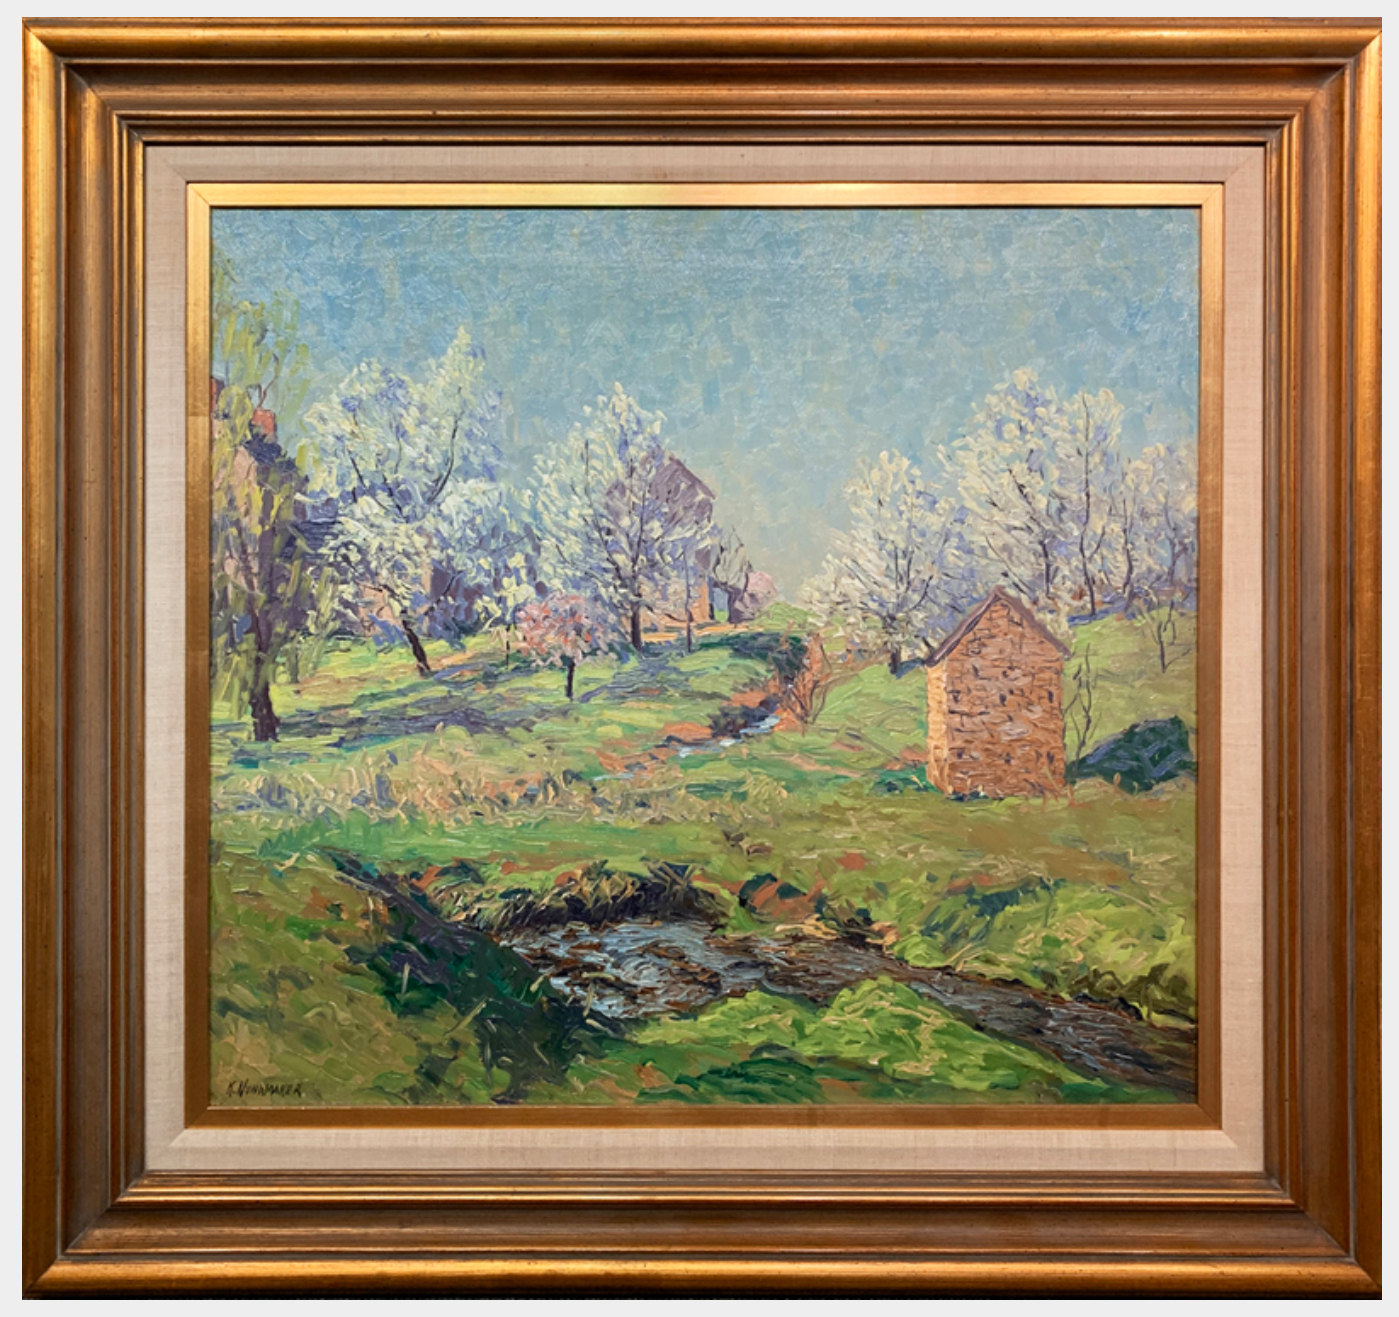 Kenneth Rollo Nunamaker (Center Bridge, Pennsylvania, 1890 - 1957), Plum Blossoms (Springtime at Fitting Farm), from the Gratz Gallery & Conservation Studio.